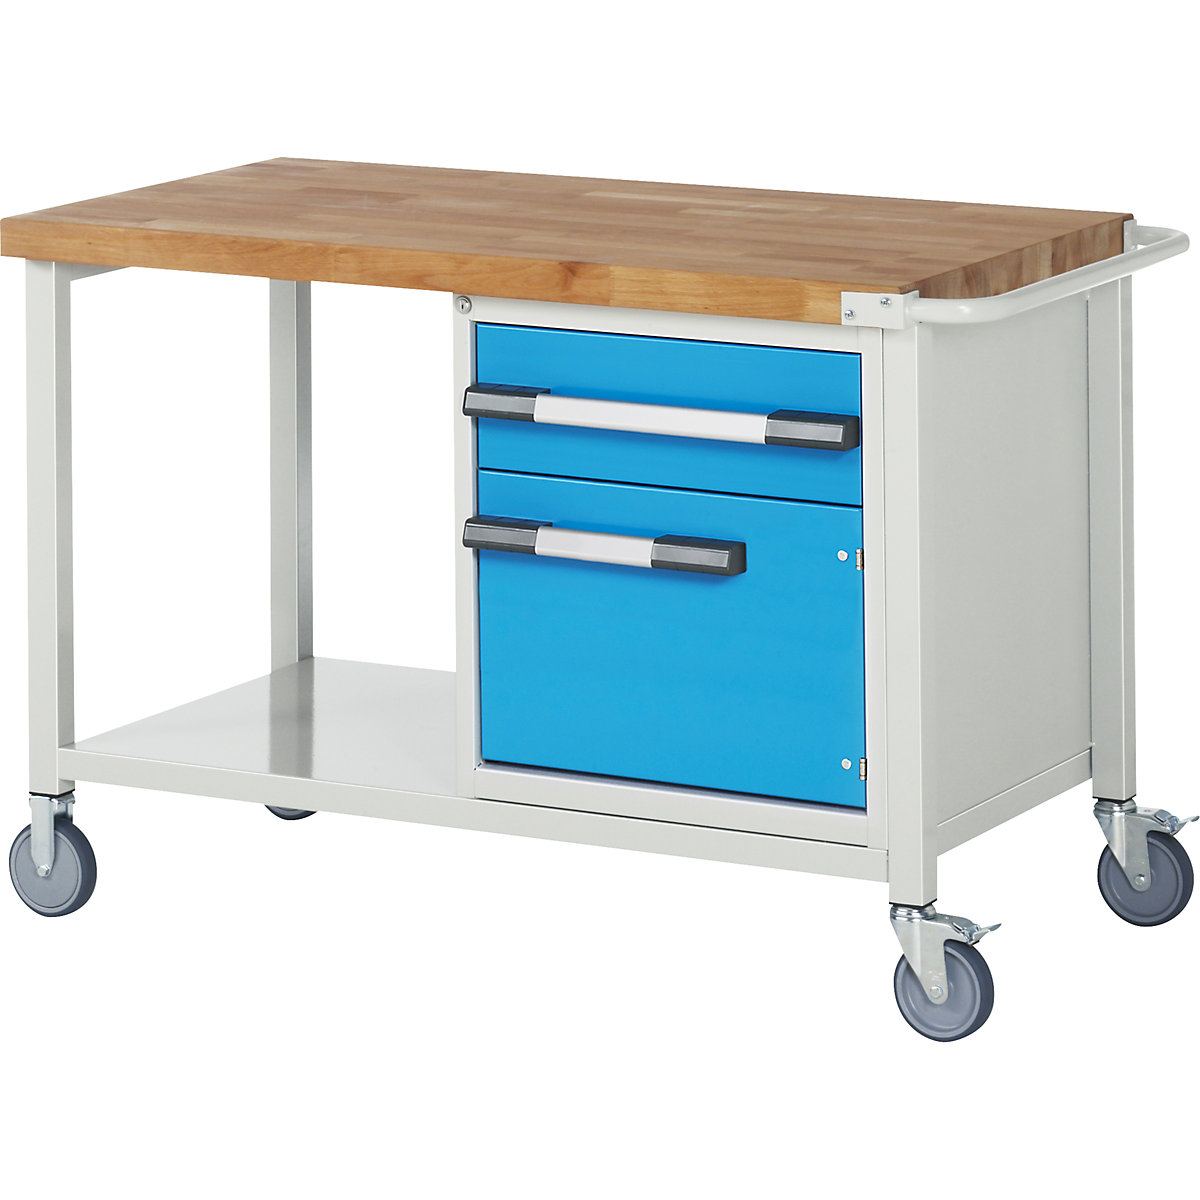 Series 8 mobile workbench, frame system – eurokraft pro, 1 drawer, 1 door, storage shelf, WxD 1250 x 700 mm-7